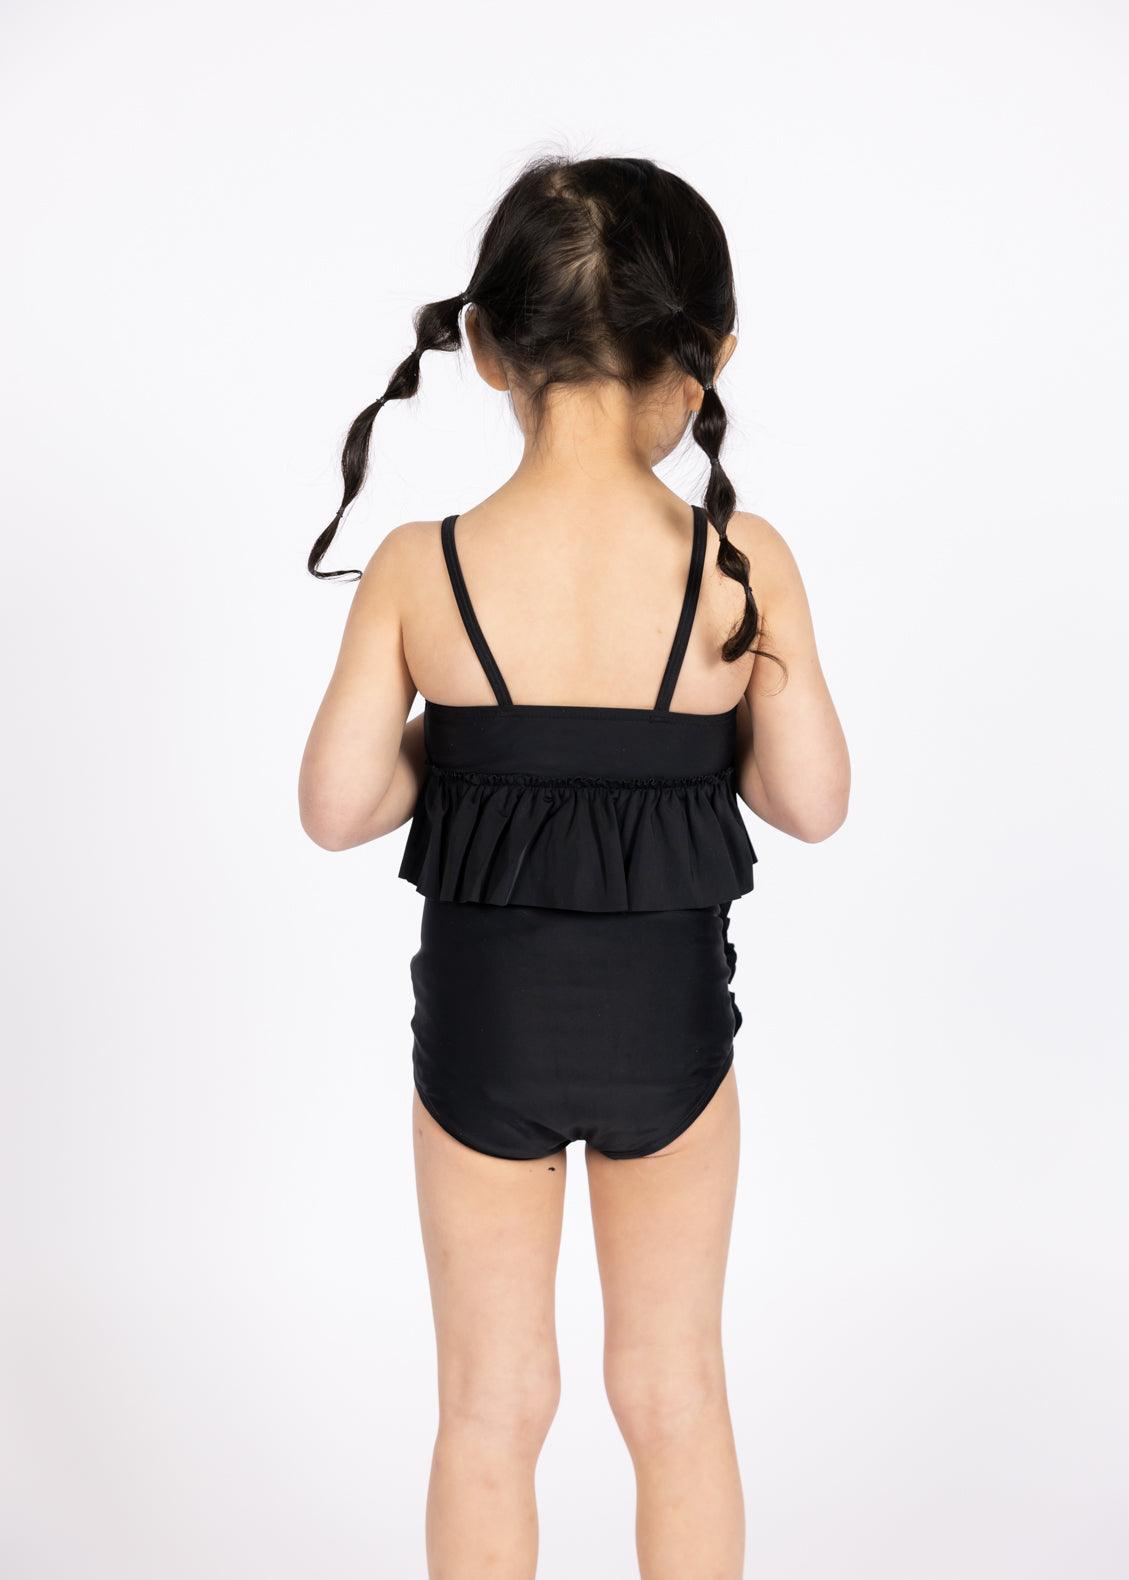 Girls High-Waisted Swimsuit Bottoms - Black